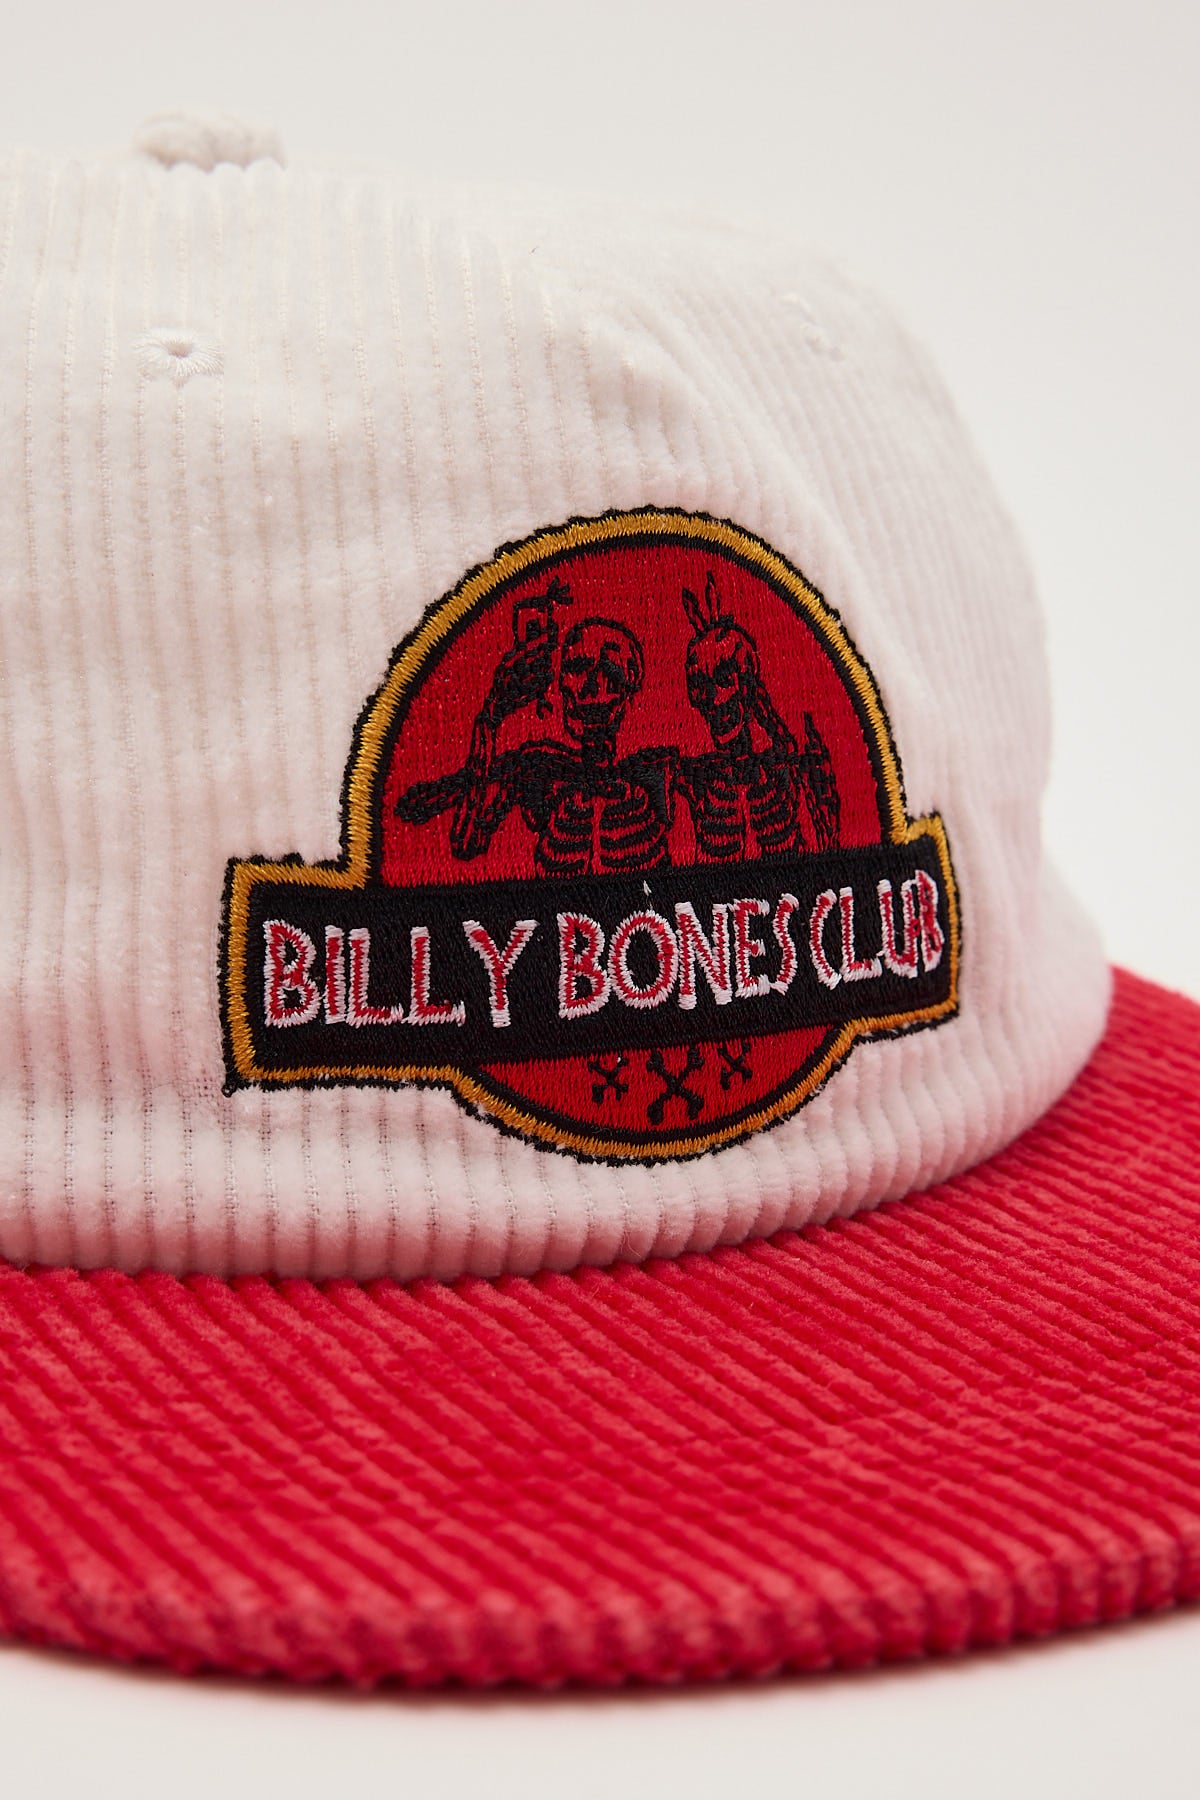 Billy Bones Club Old Mates Cap Red/White